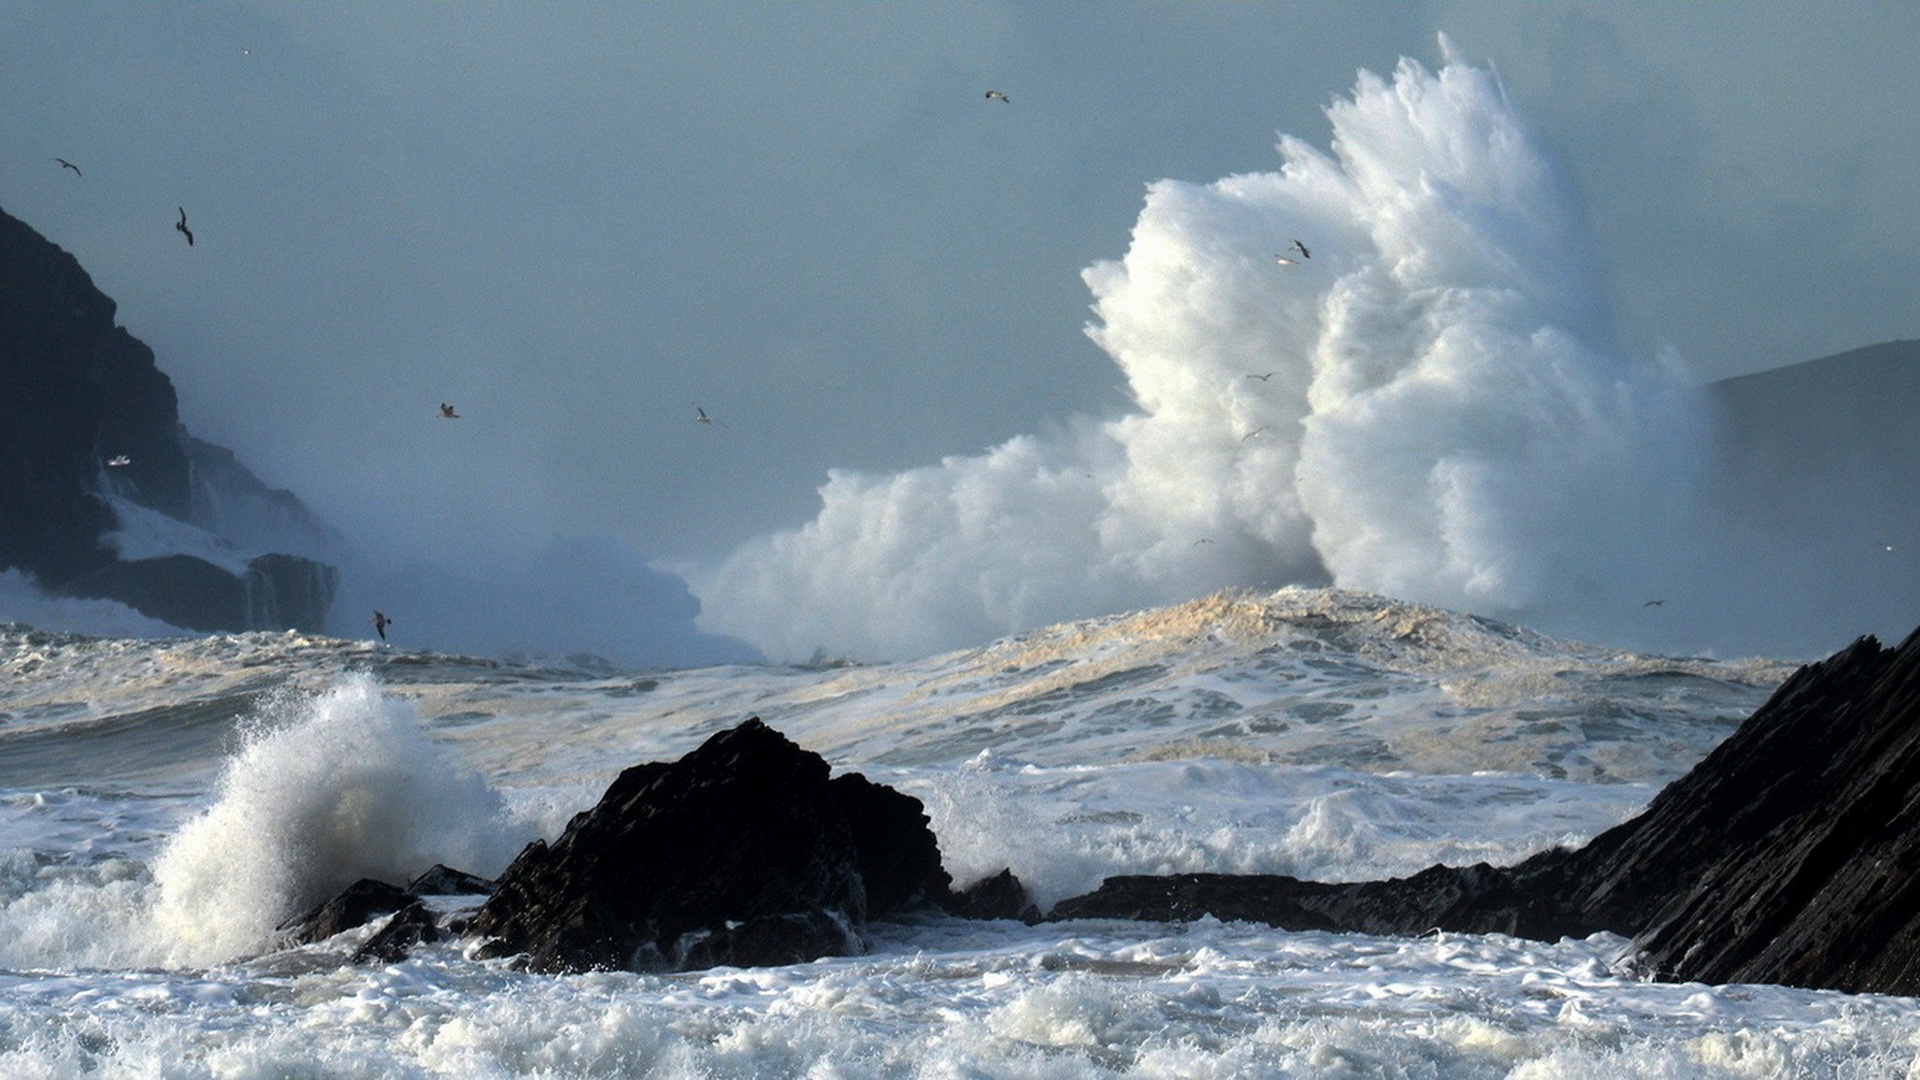 Семей шторм. Генисаретское озеро шторм. Исландия шторм. Сильный шторм. Море шторм.